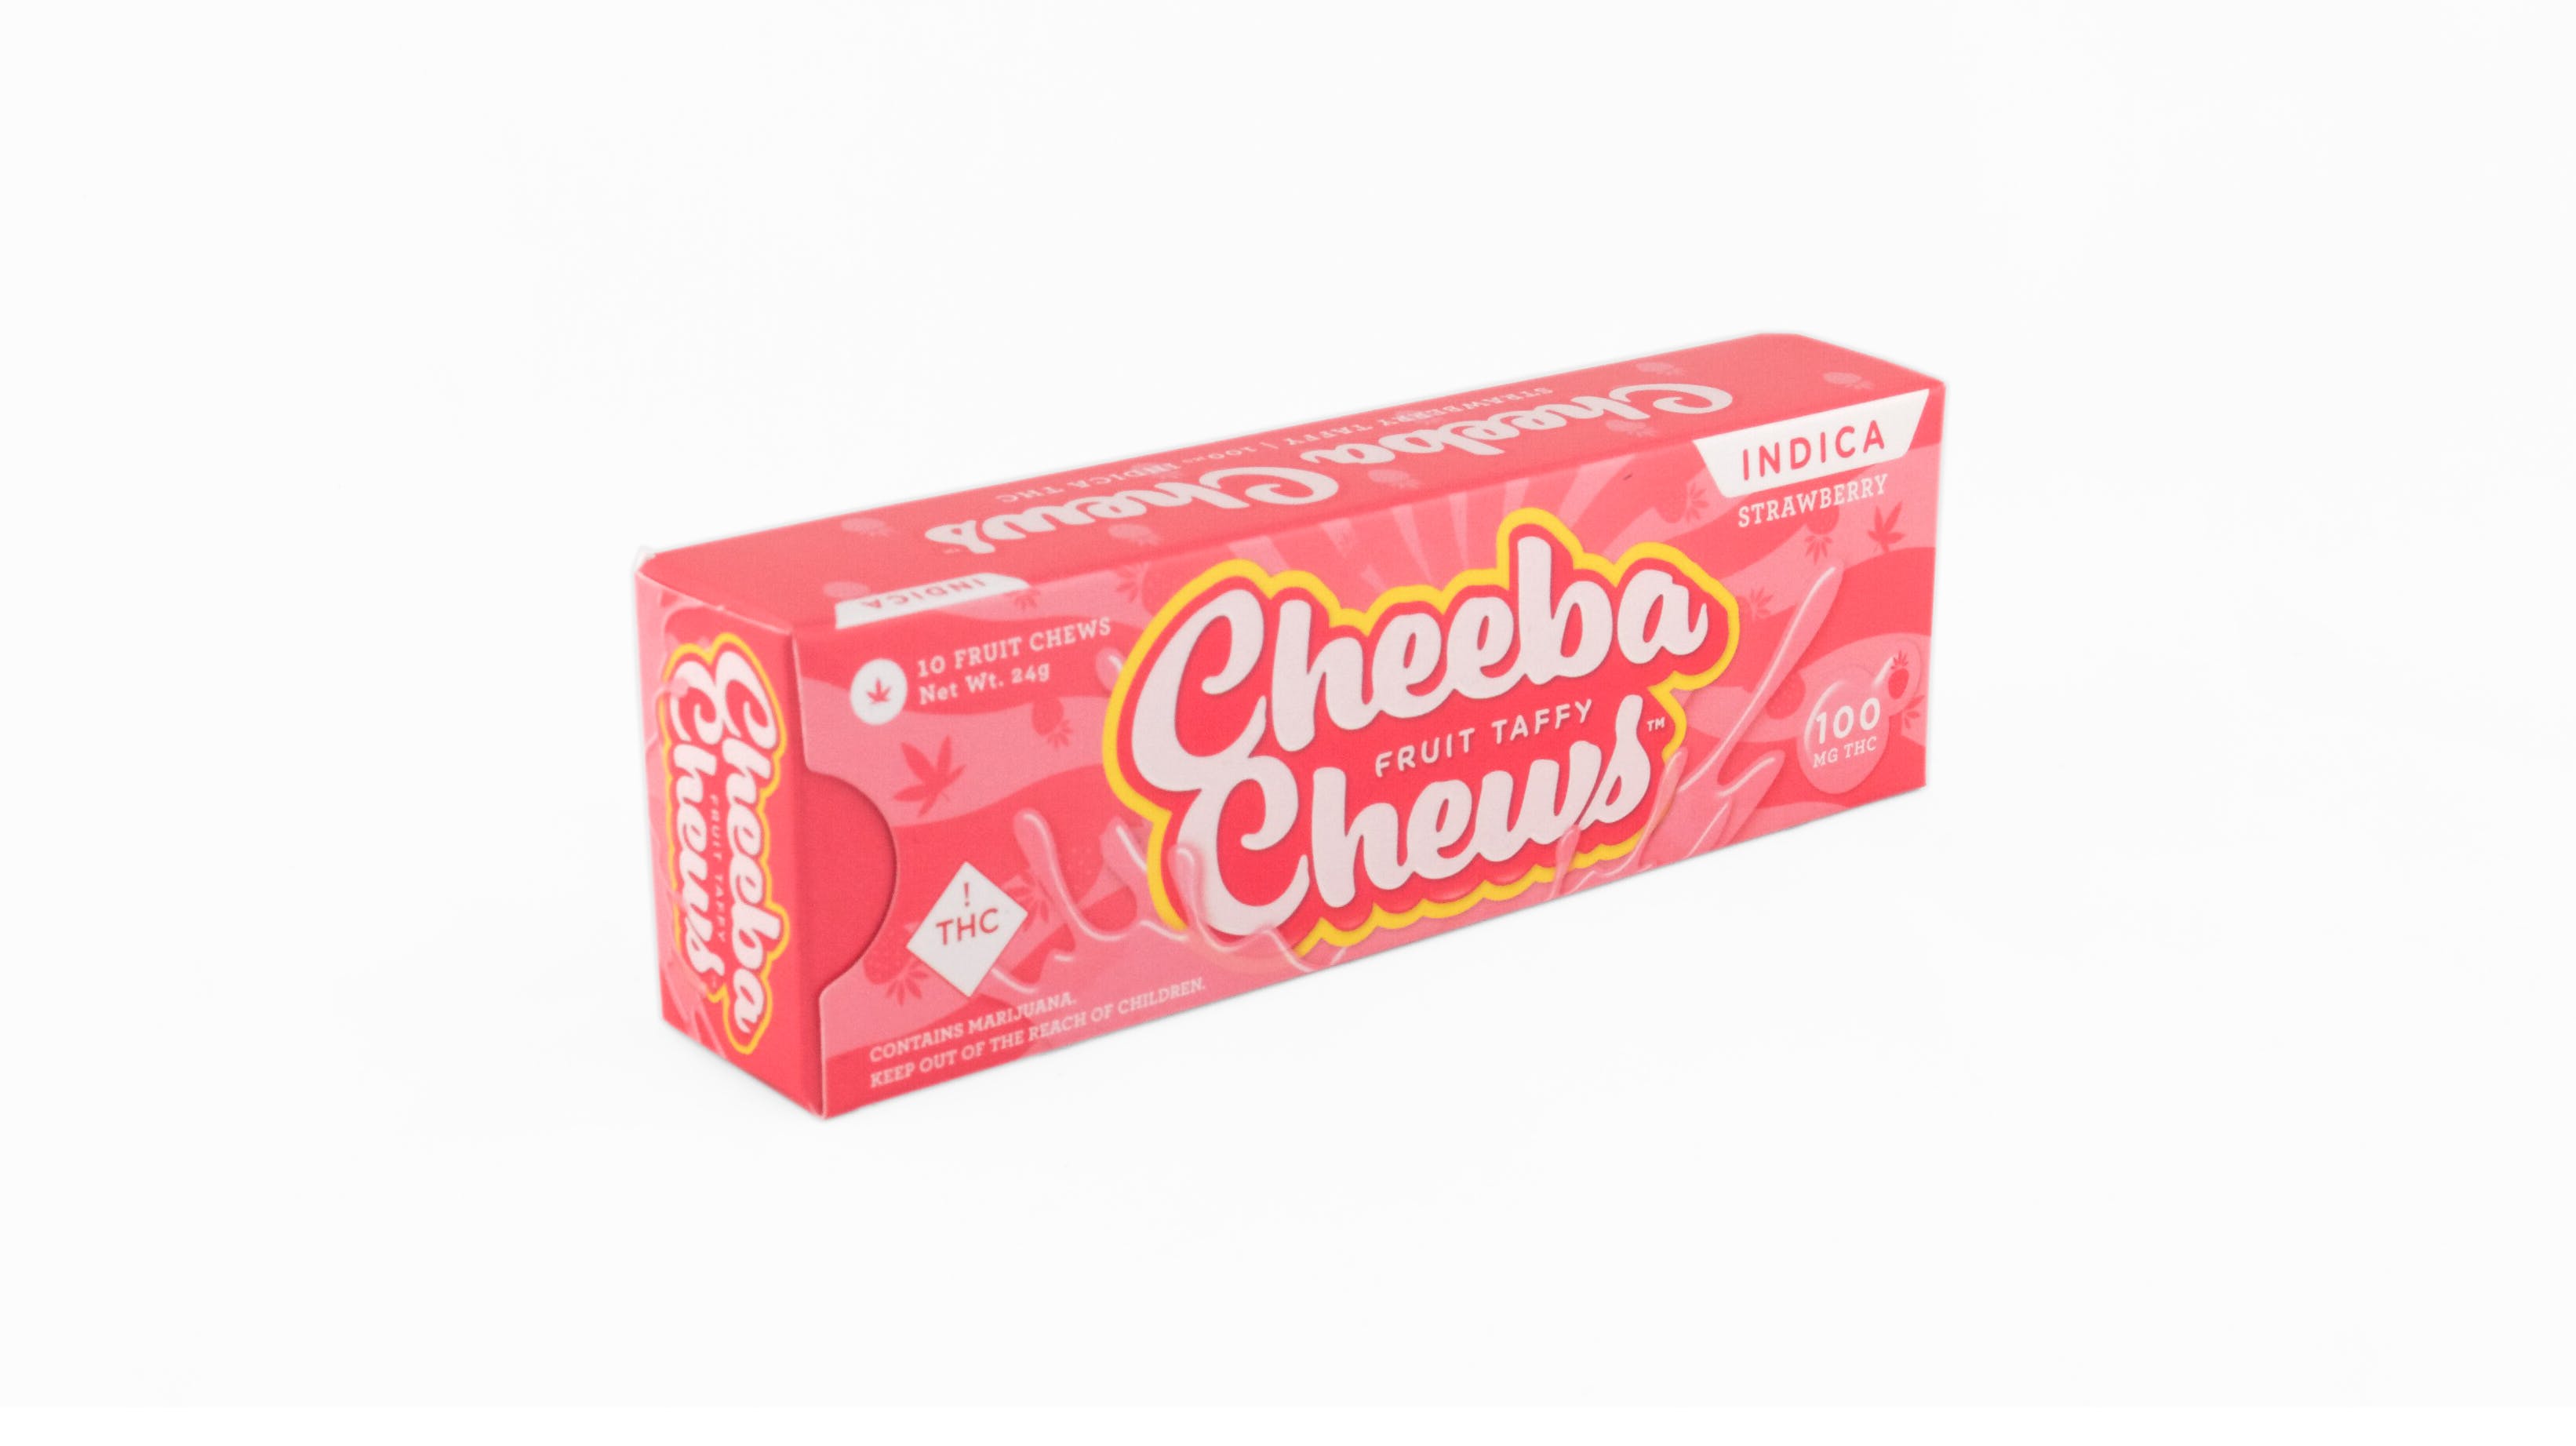 edible-cheeba-chew-taffy-100mg-strawberry-indica